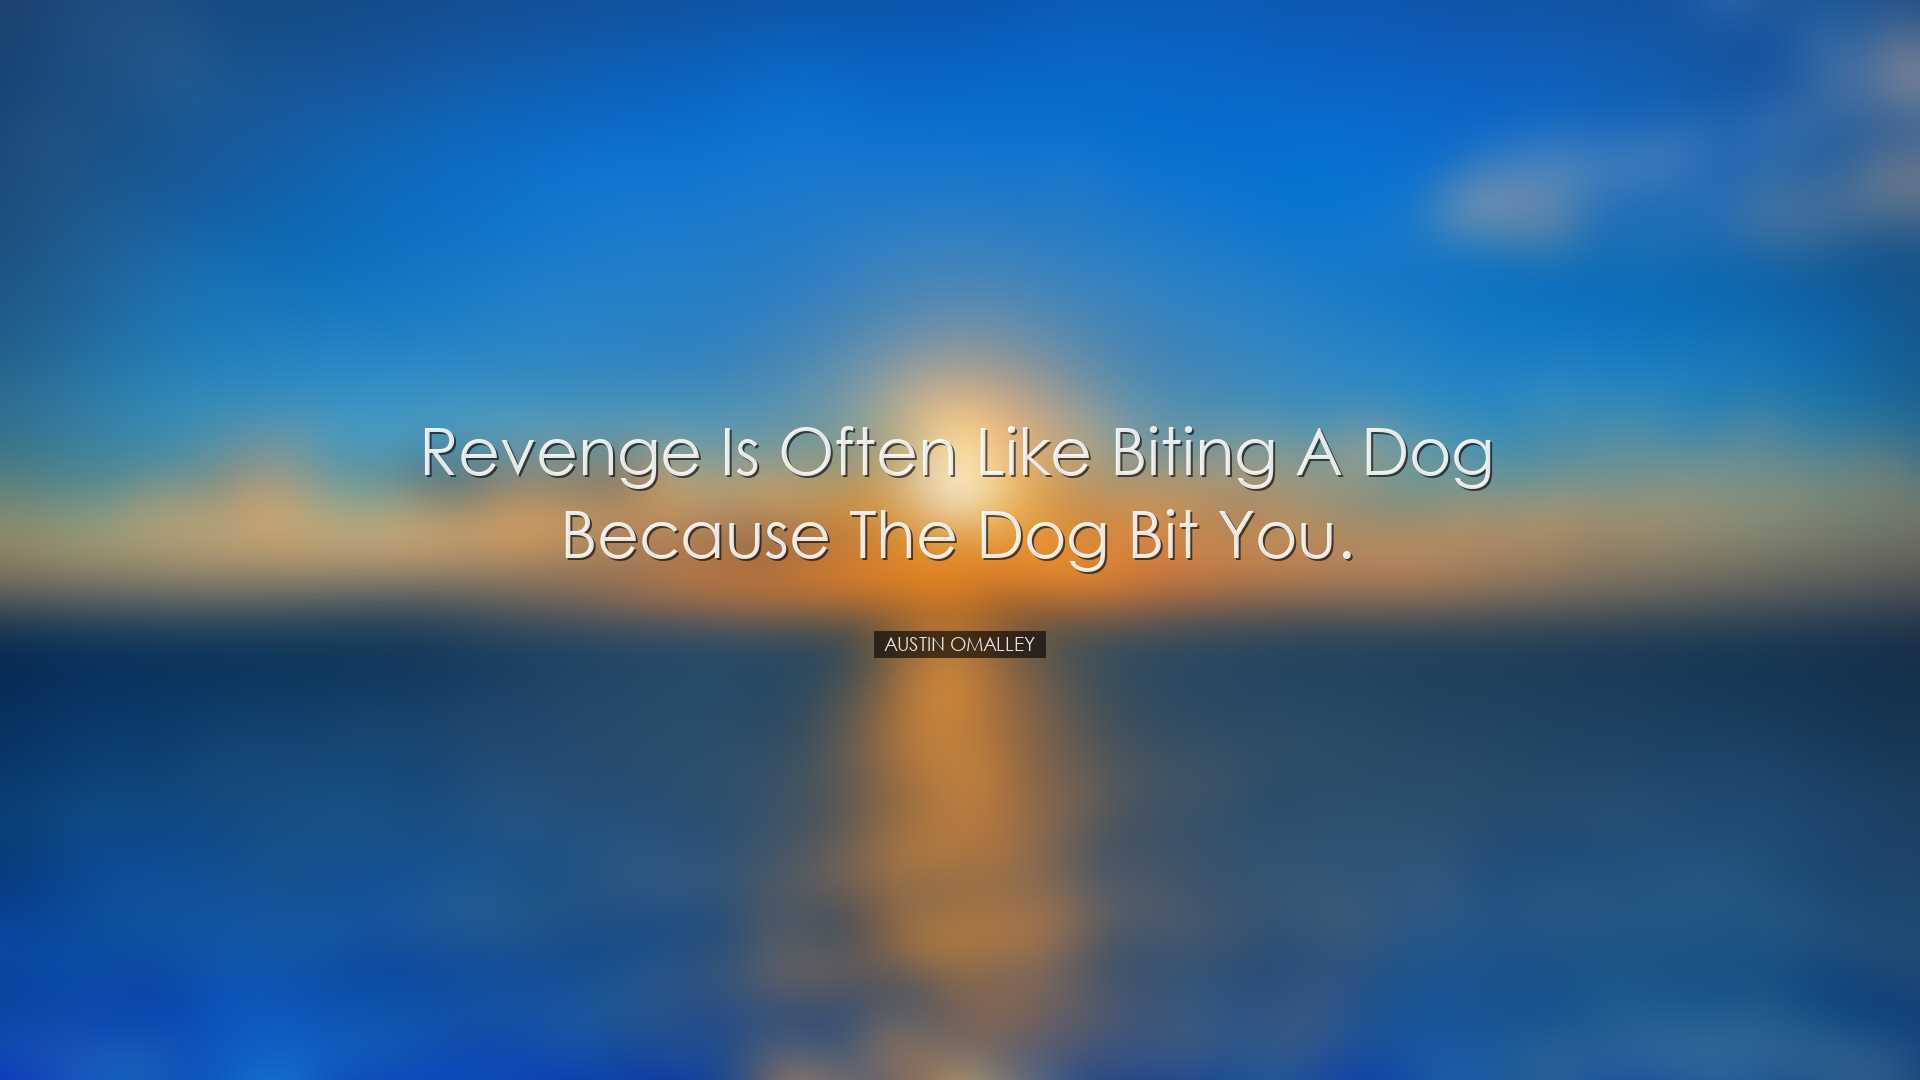 Revenge is often like biting a dog because the dog bit you. - Aust